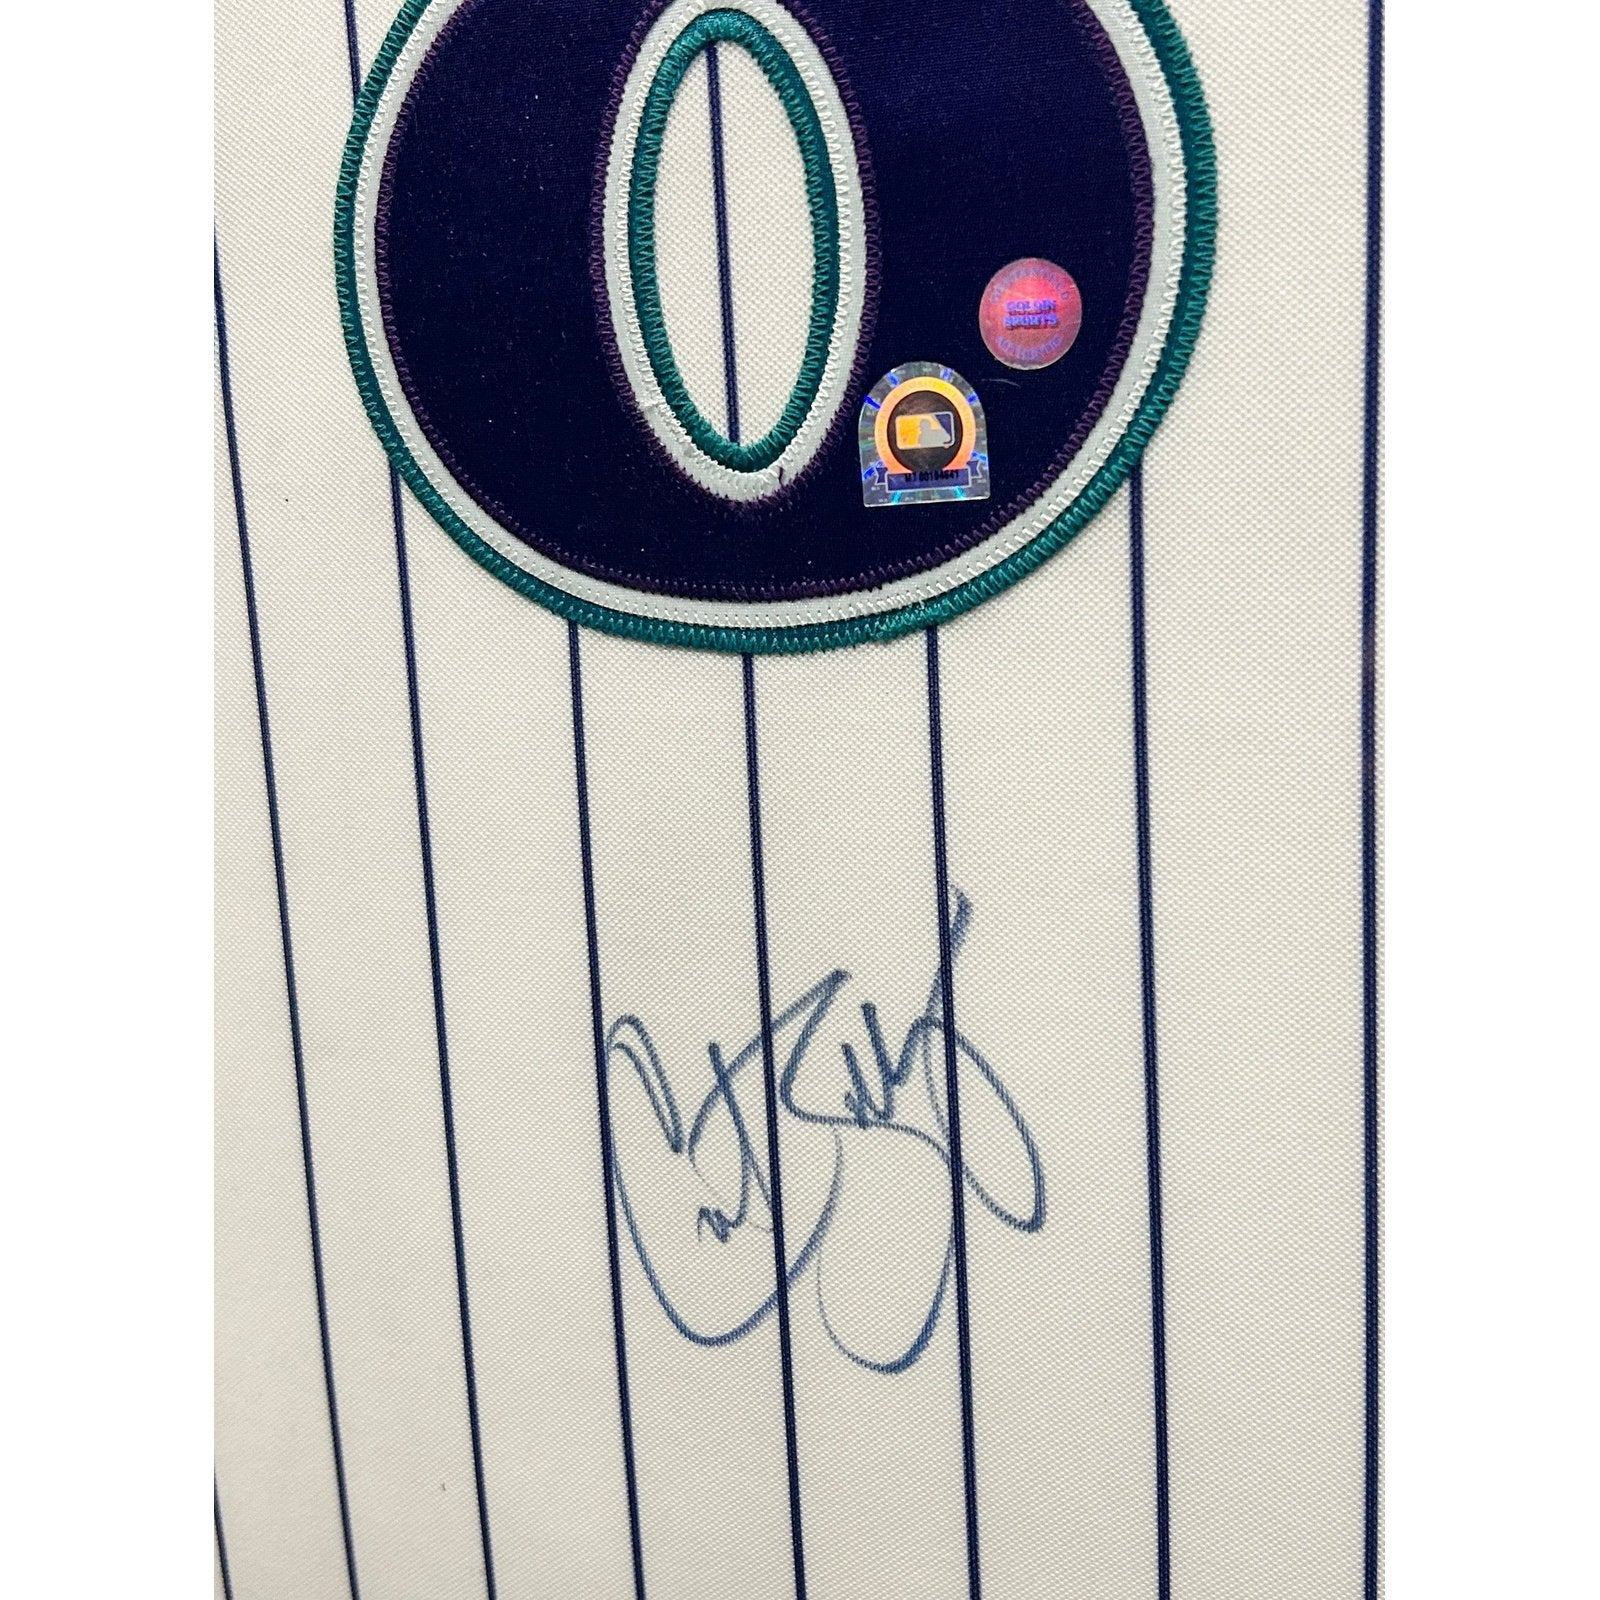 Autographed/Signed Curt Schilling Boston Blue Baseball Jersey JSA